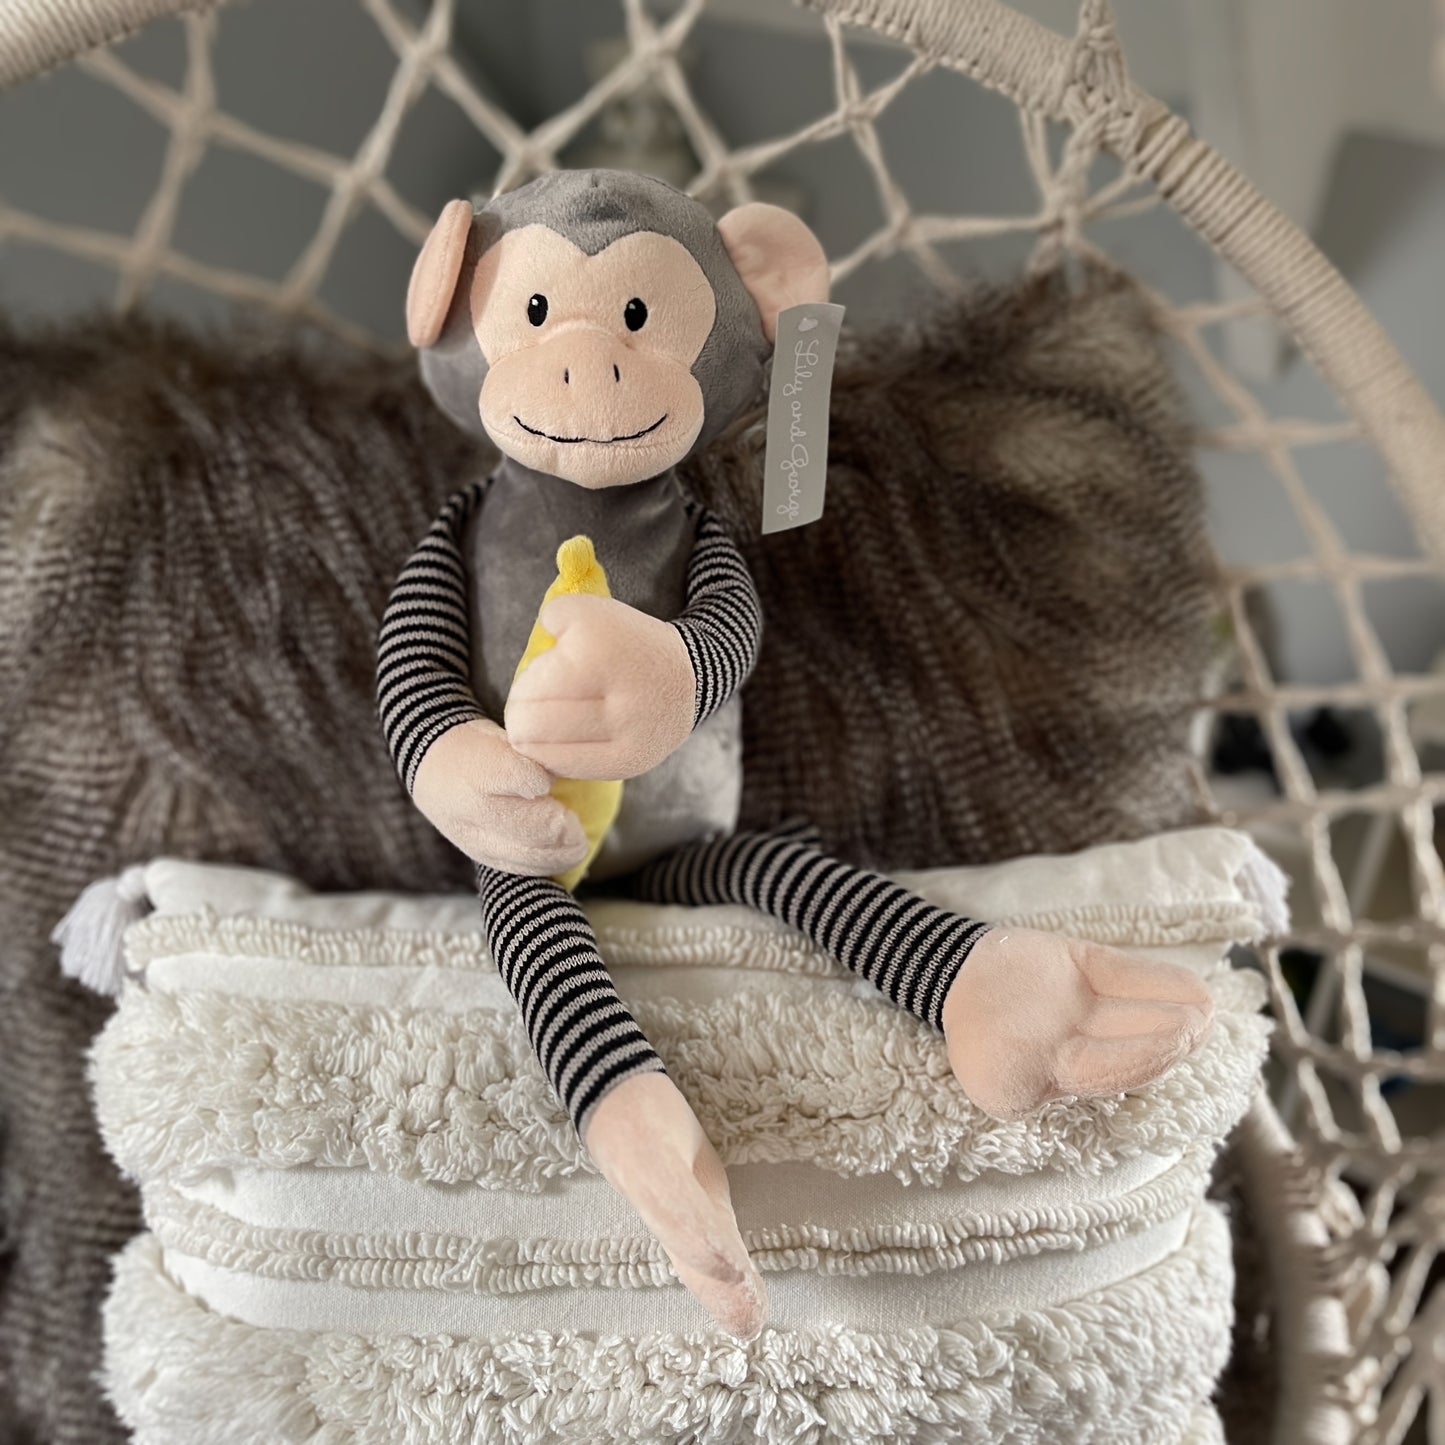 Soft toy monkey holding a banana.